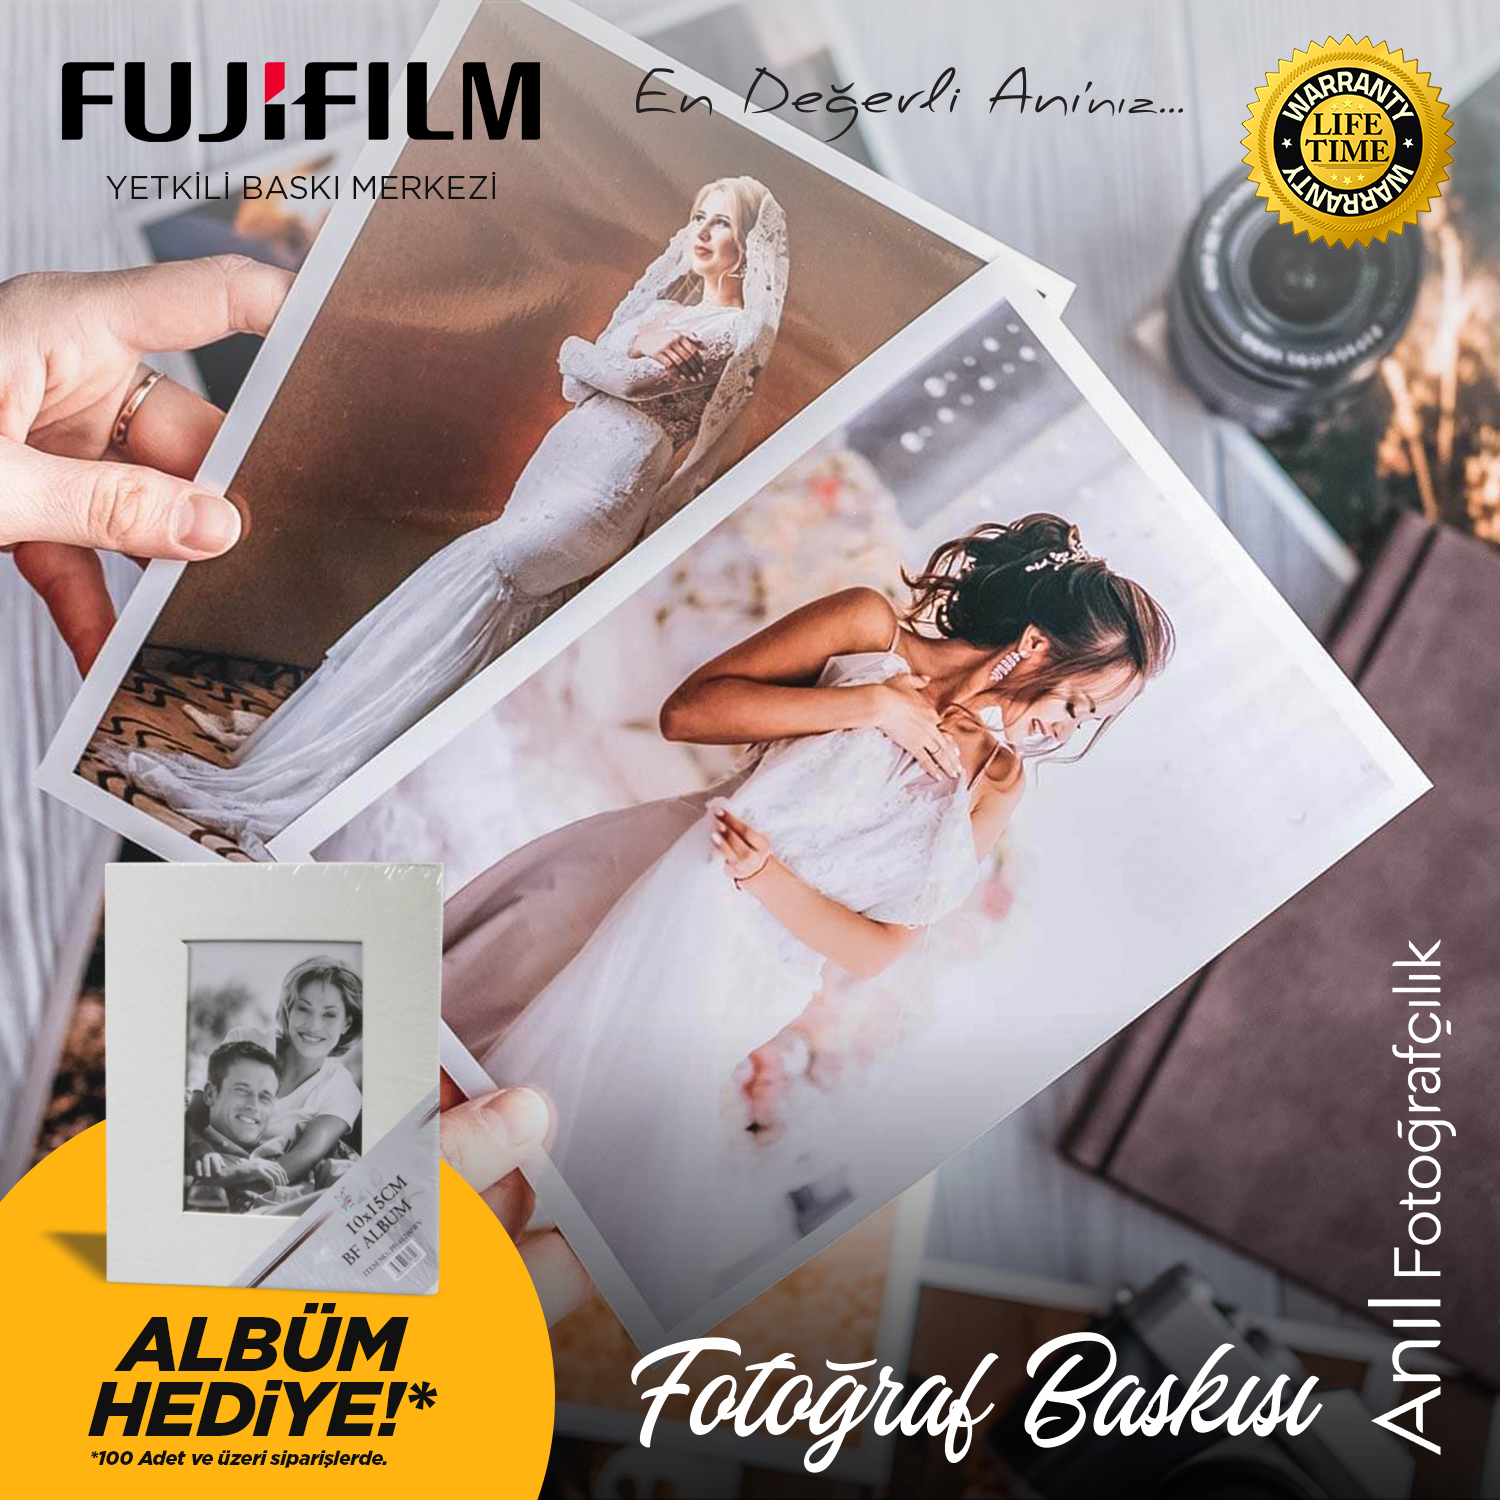 Fotoğraf Baskısı Orjinal Fujifilm